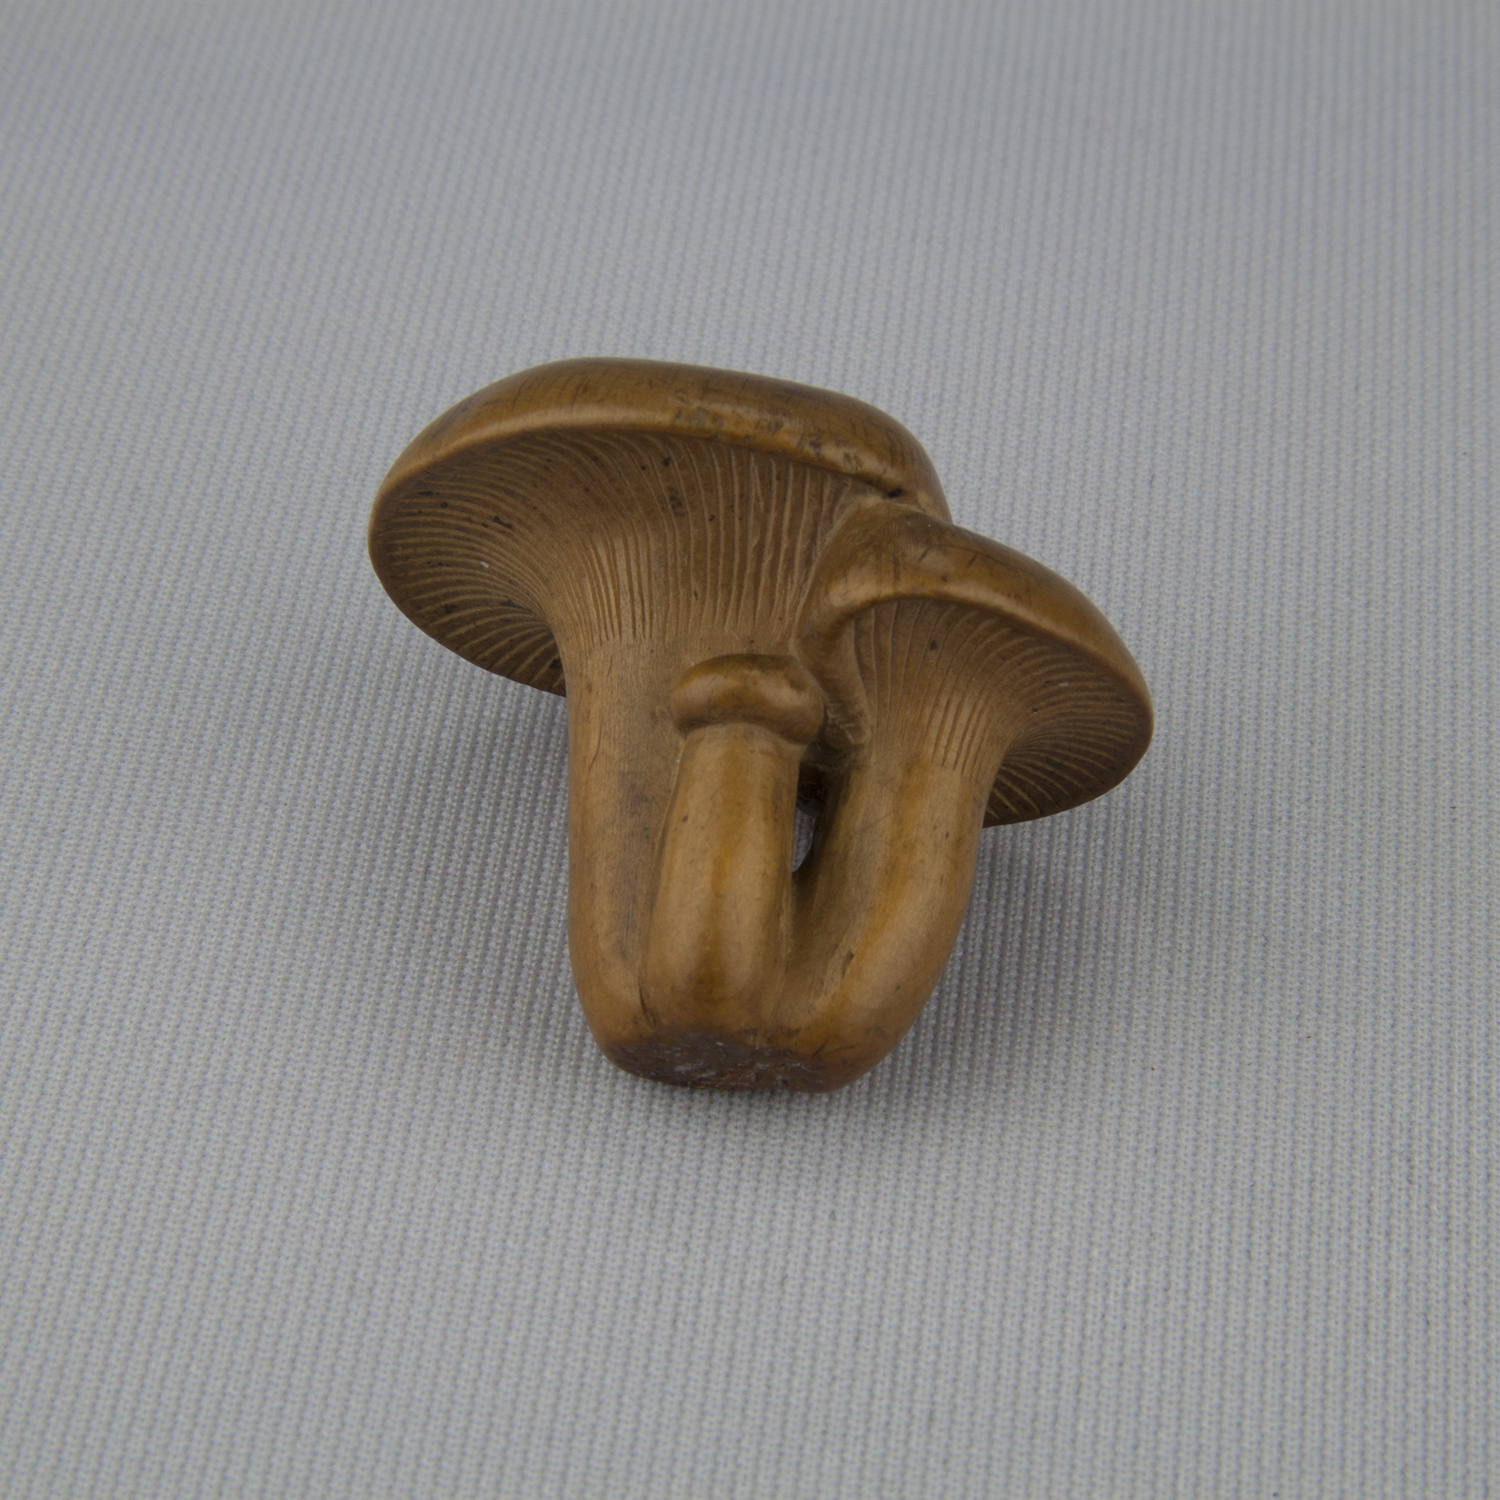 Netsuke depicting mushrooms, ca. 18th–19th century, wood, The Herman D. Doochin Collection, 1992.153